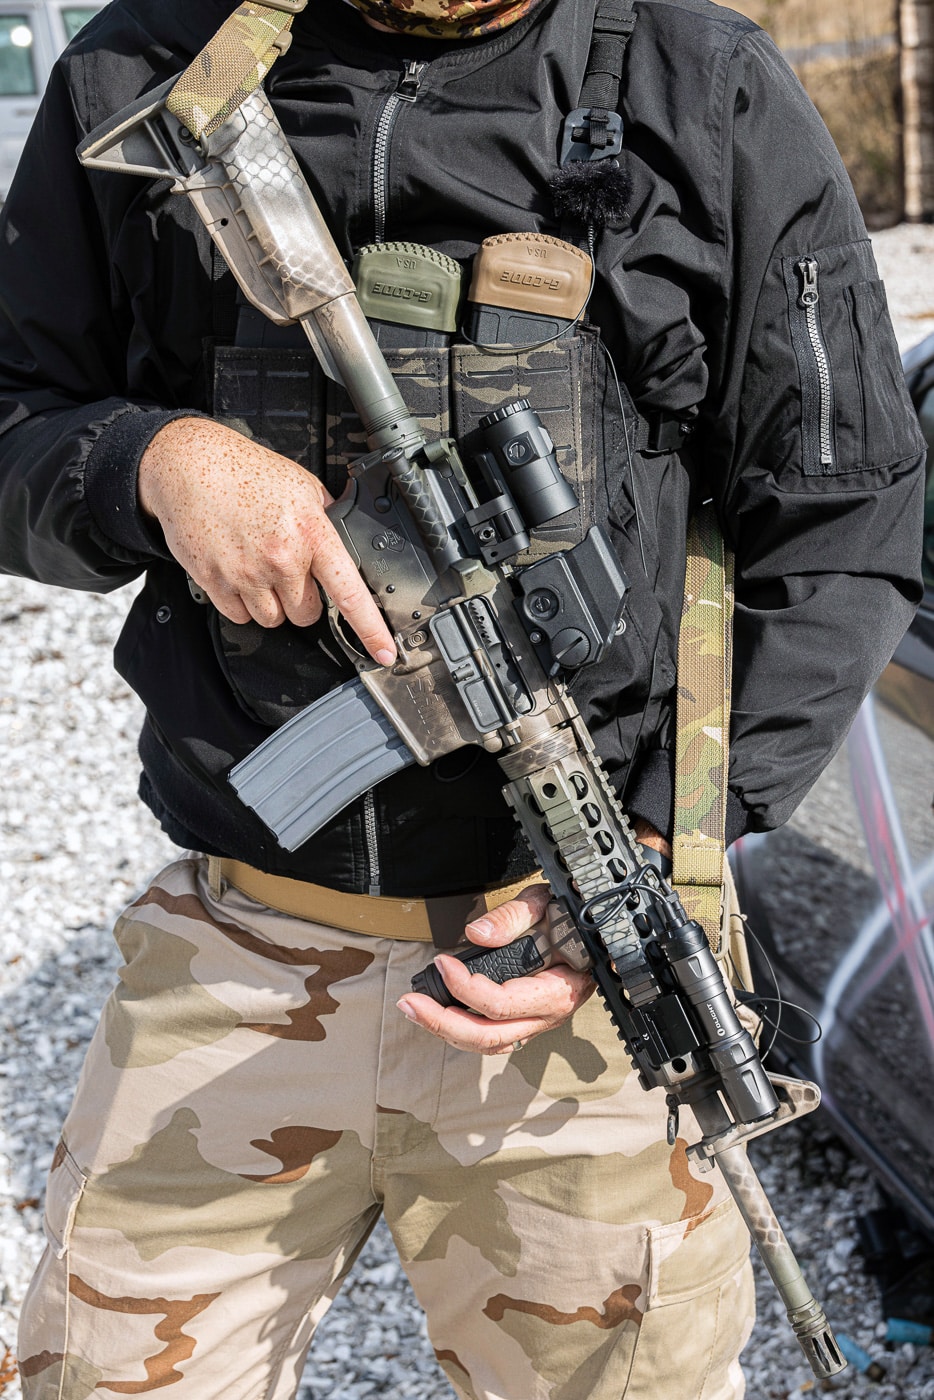 the meprolight tru-vision mounted on a saint rifle